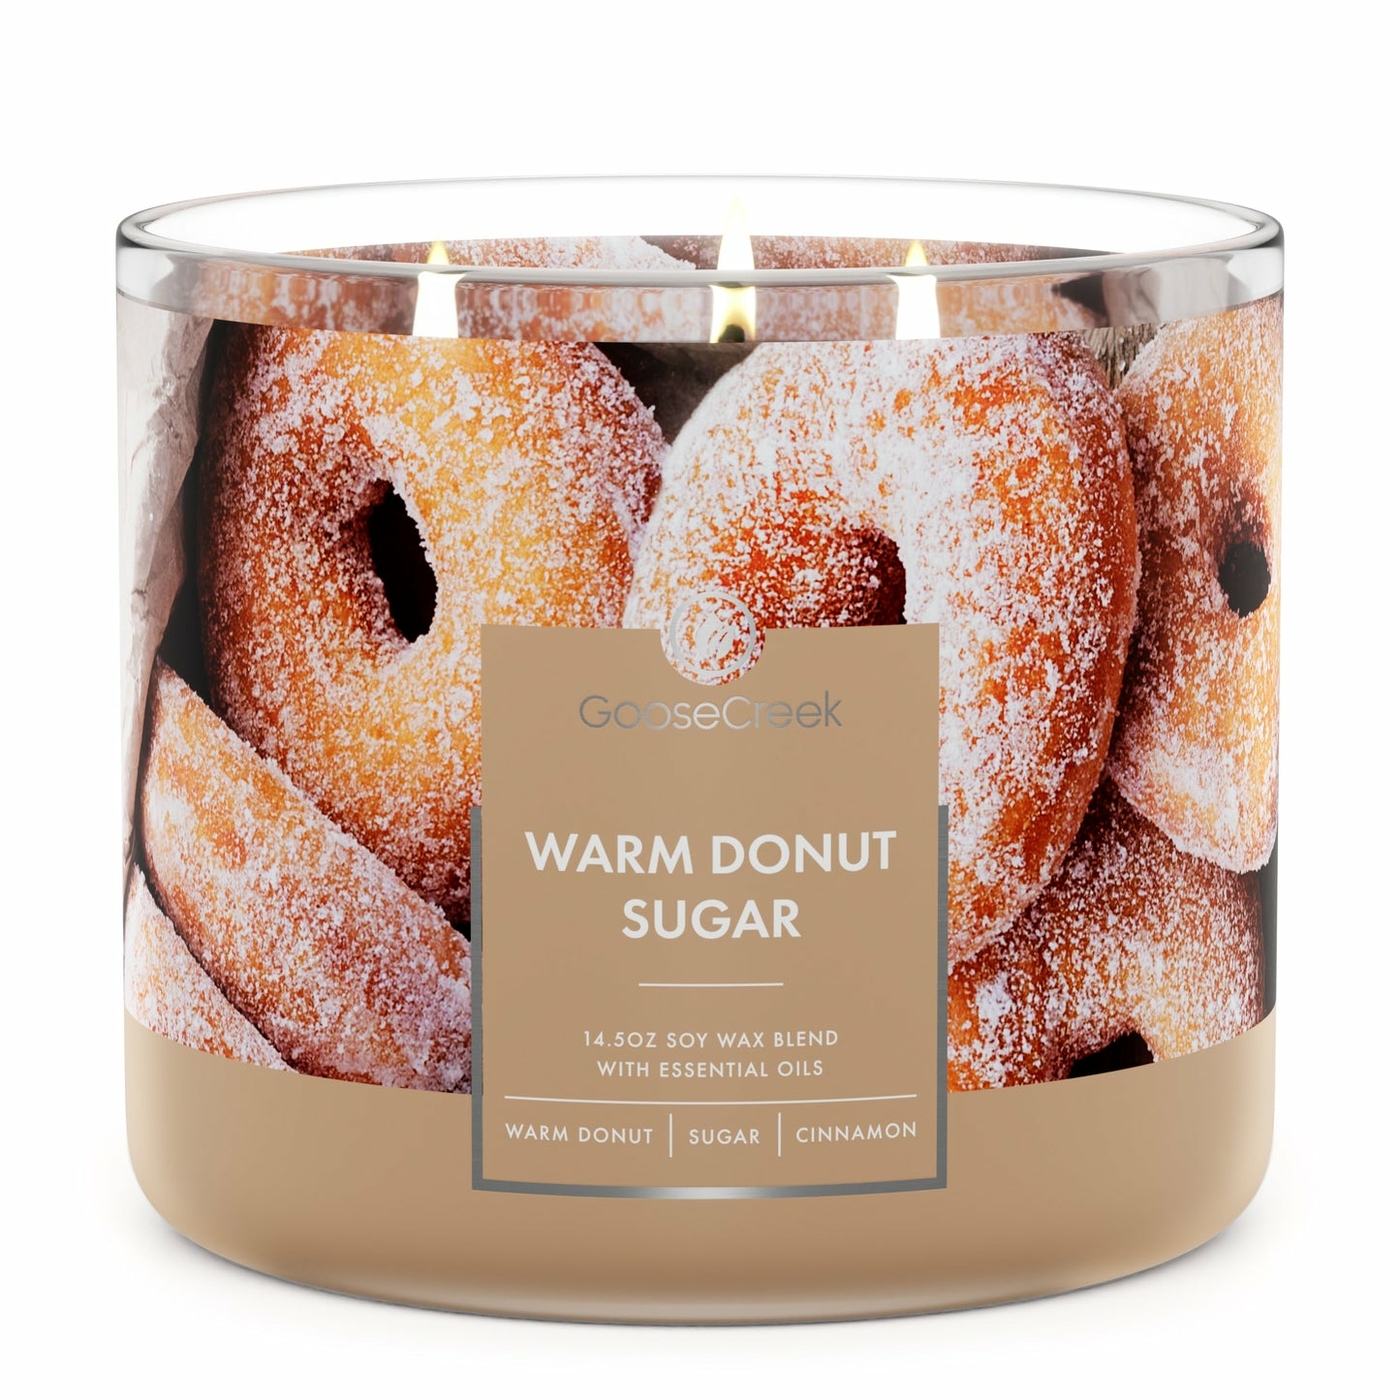 Warm Donut Sugar